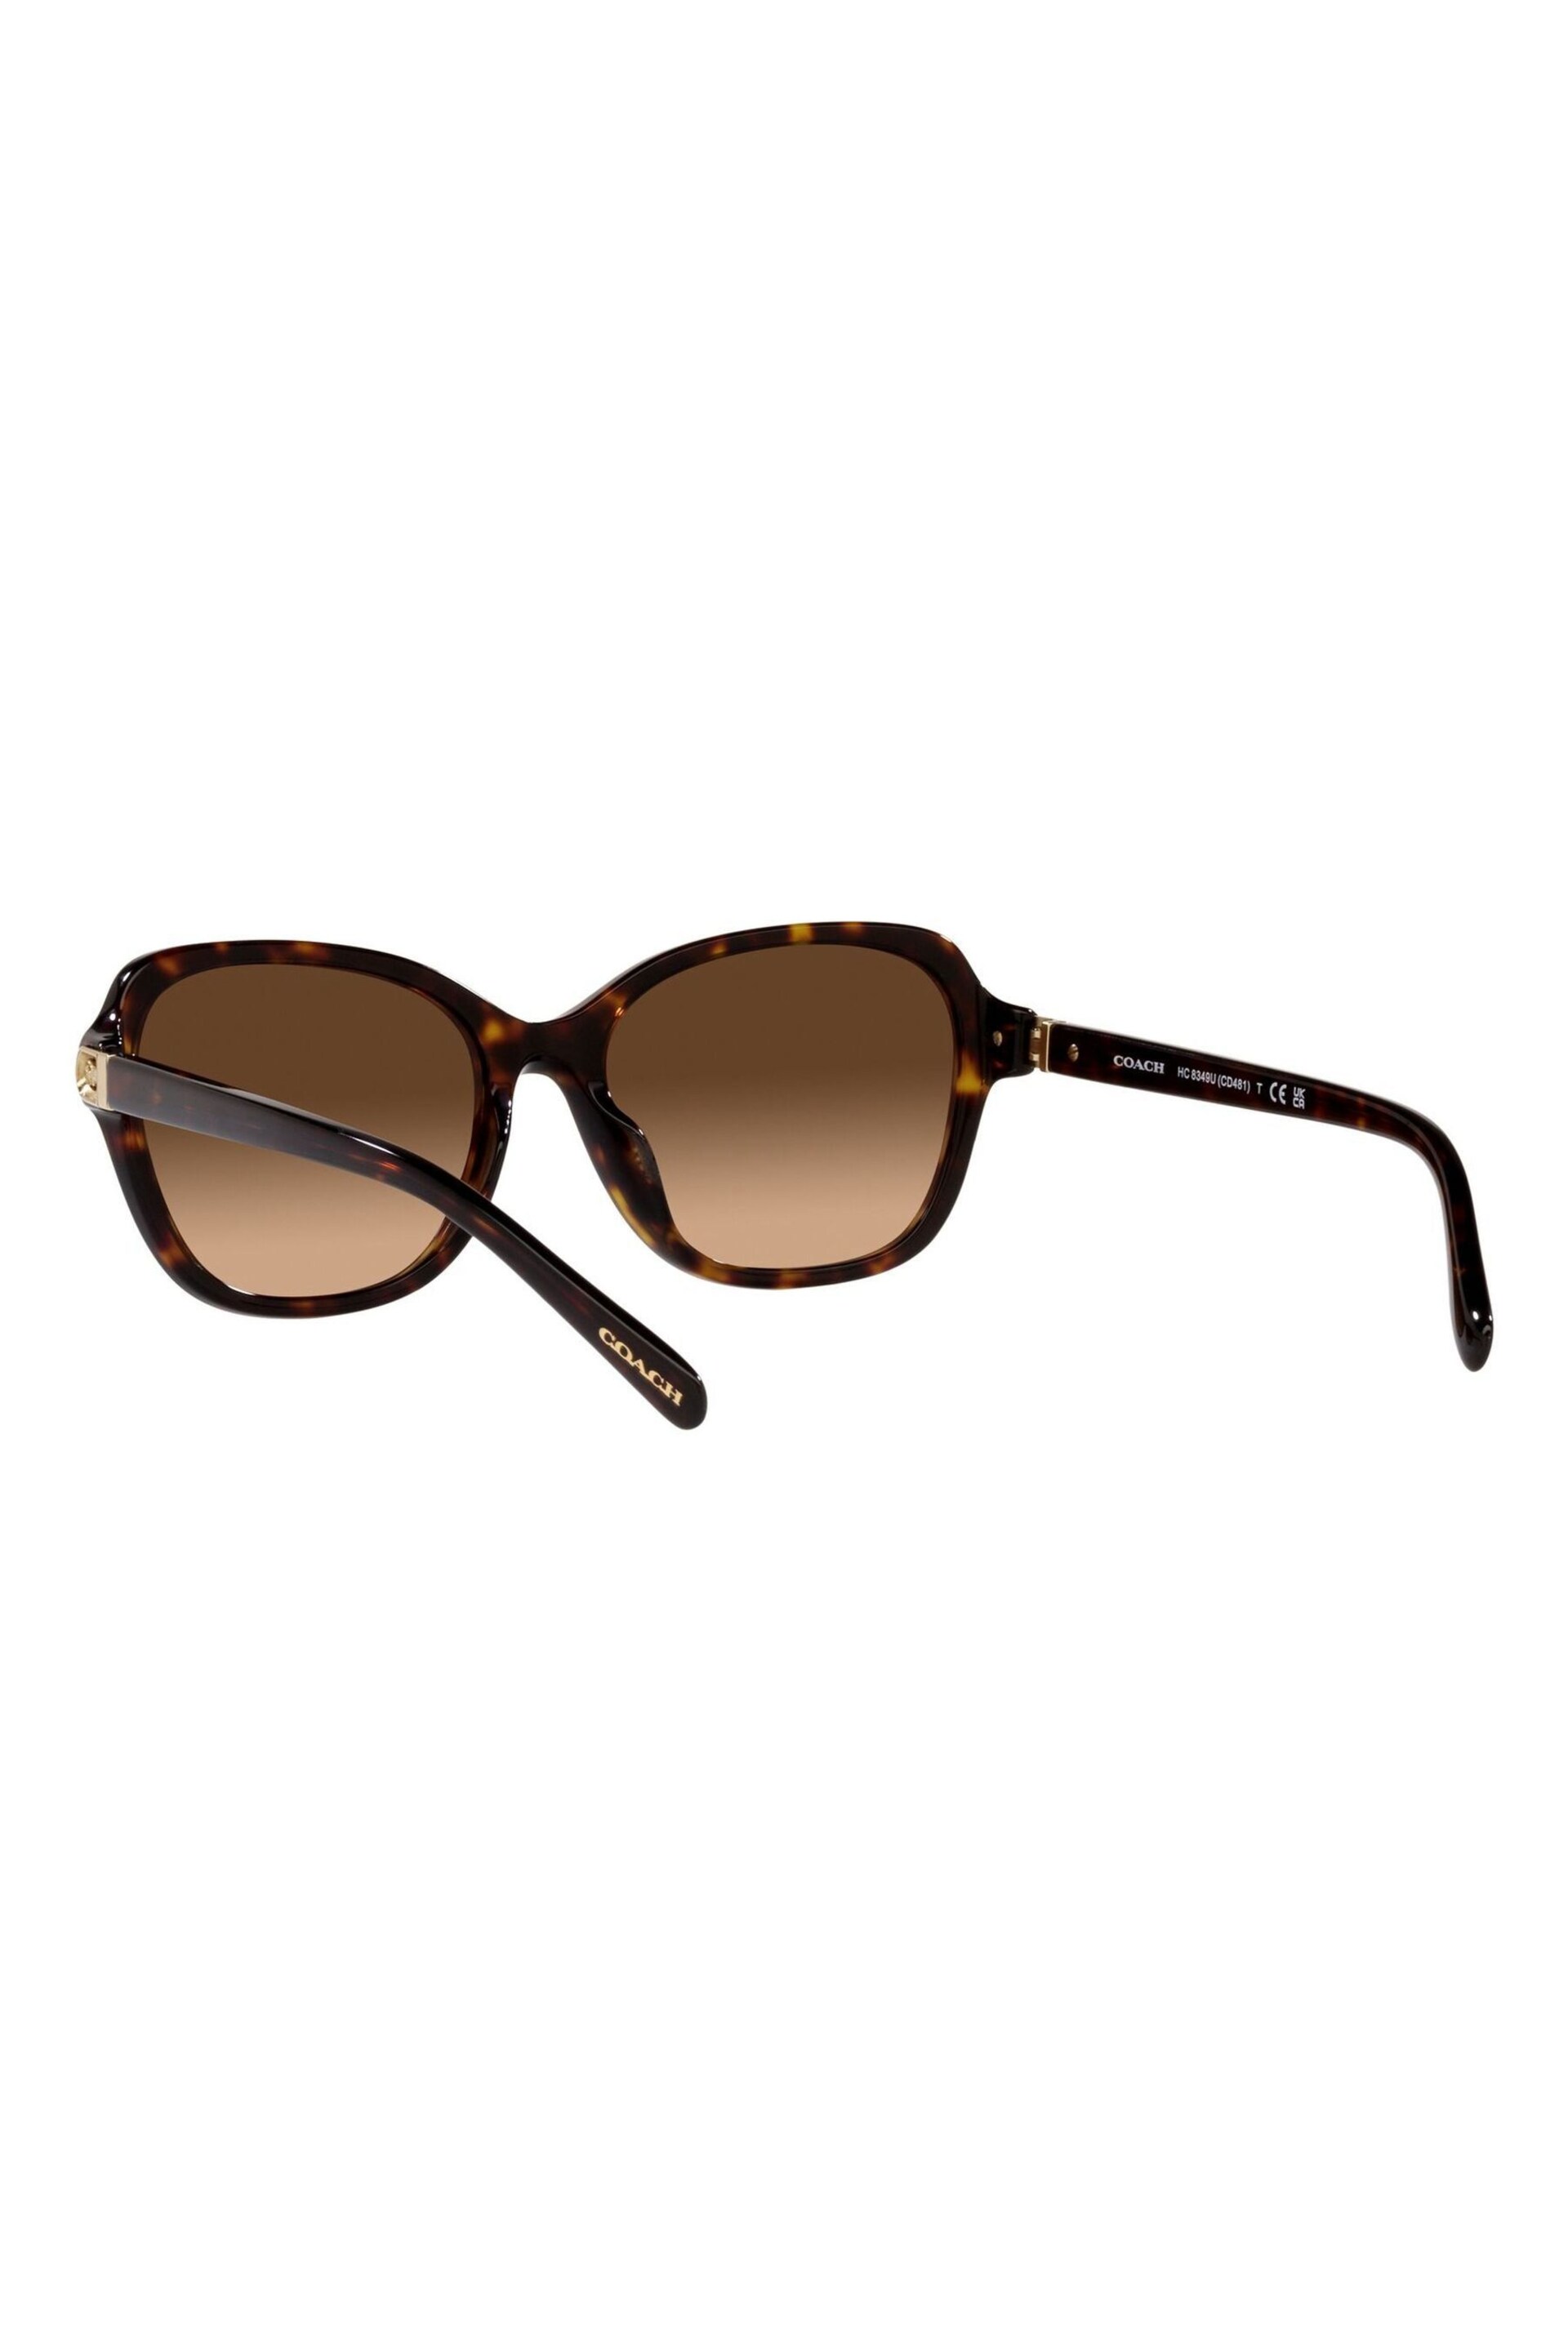 COACH Brown 0HC8349U Sunglasses - Image 12 of 14